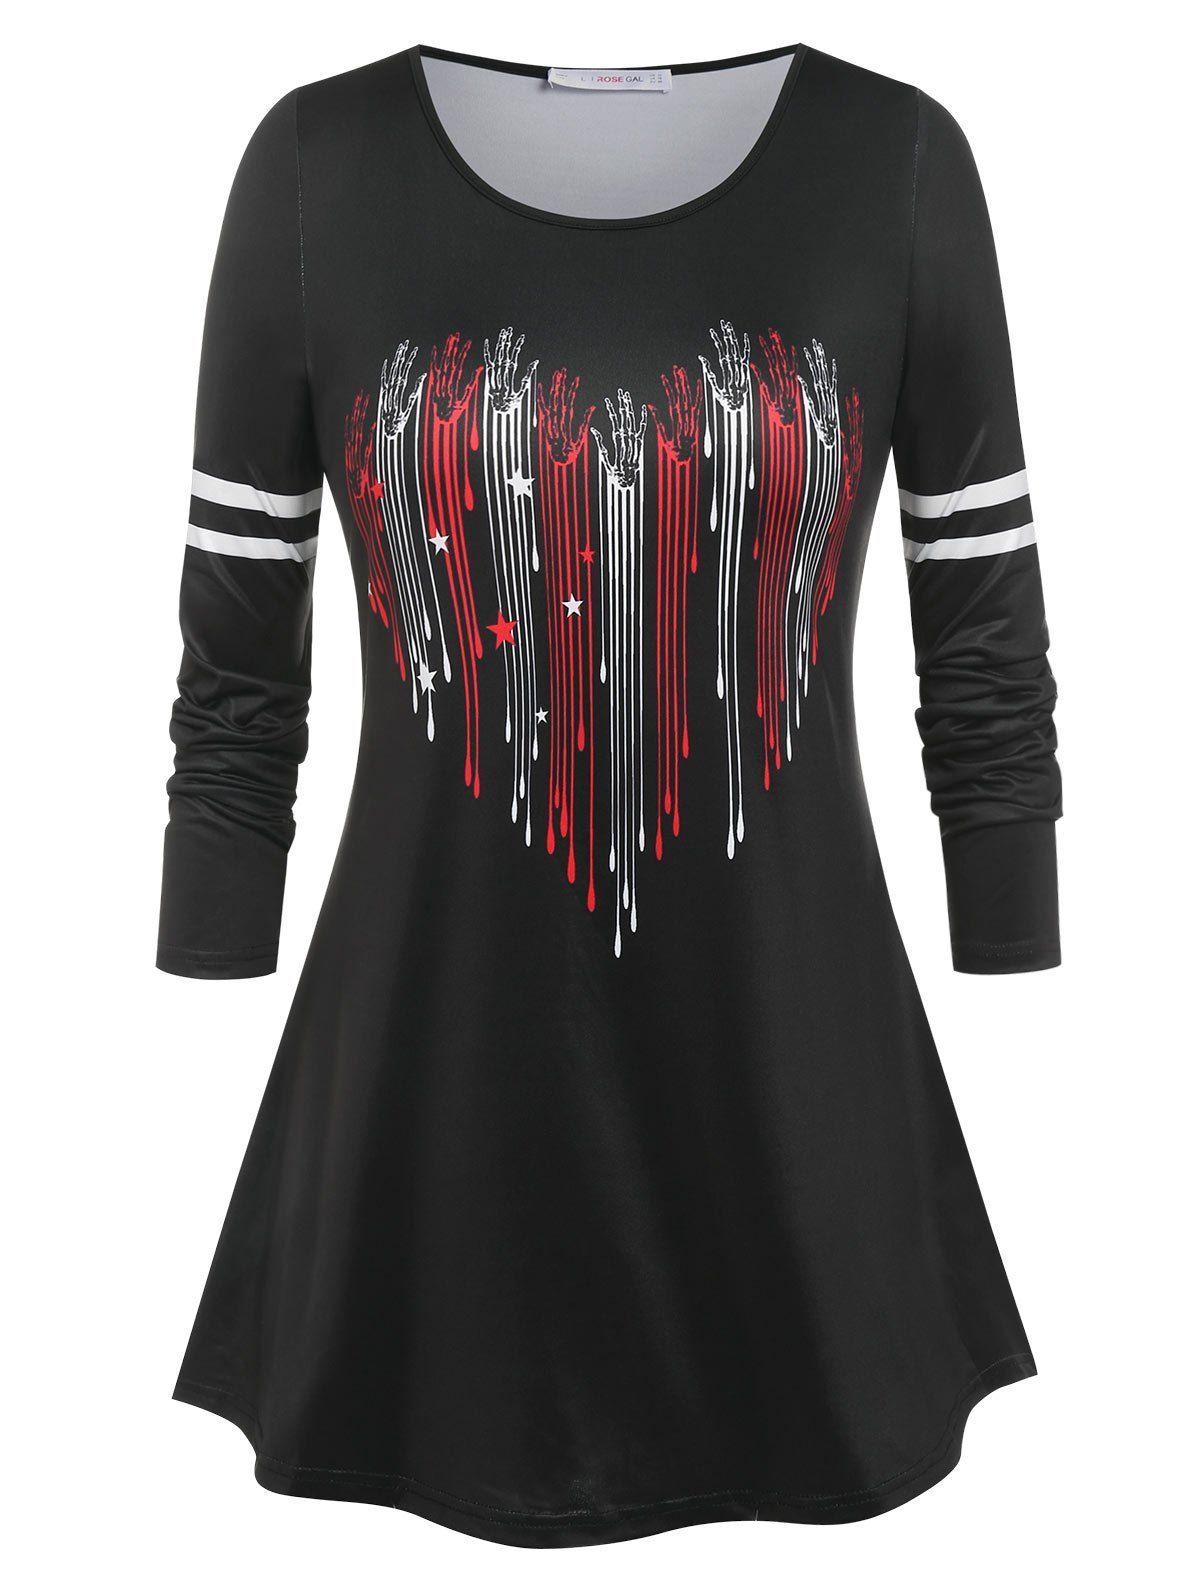 Plus Size Heart Print  Striped T Shirt - BLACK 5X